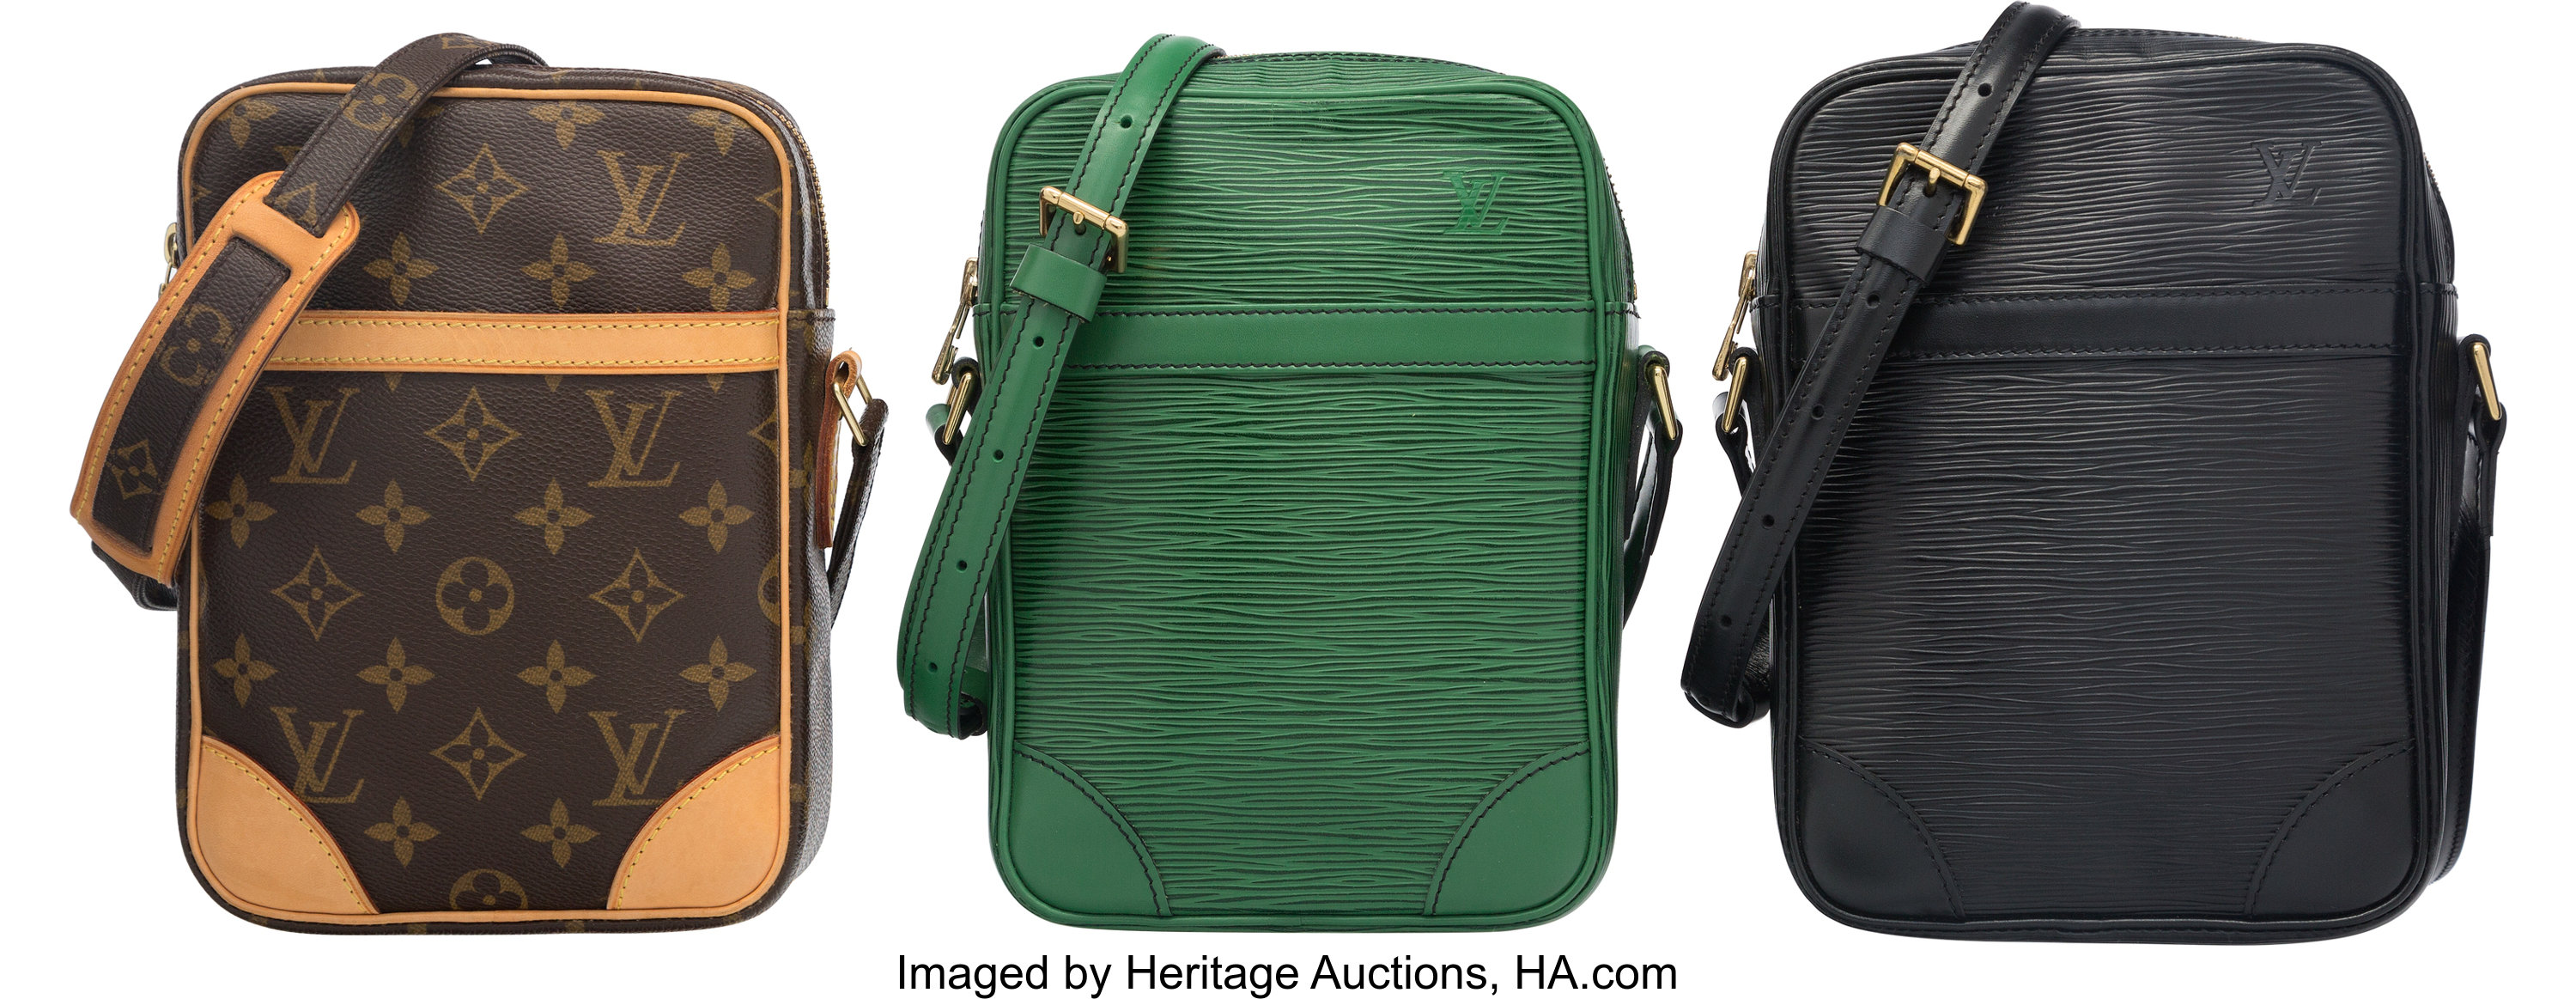 Louis Vuitton Set of Three; Black & Green Epi Leather & Classic